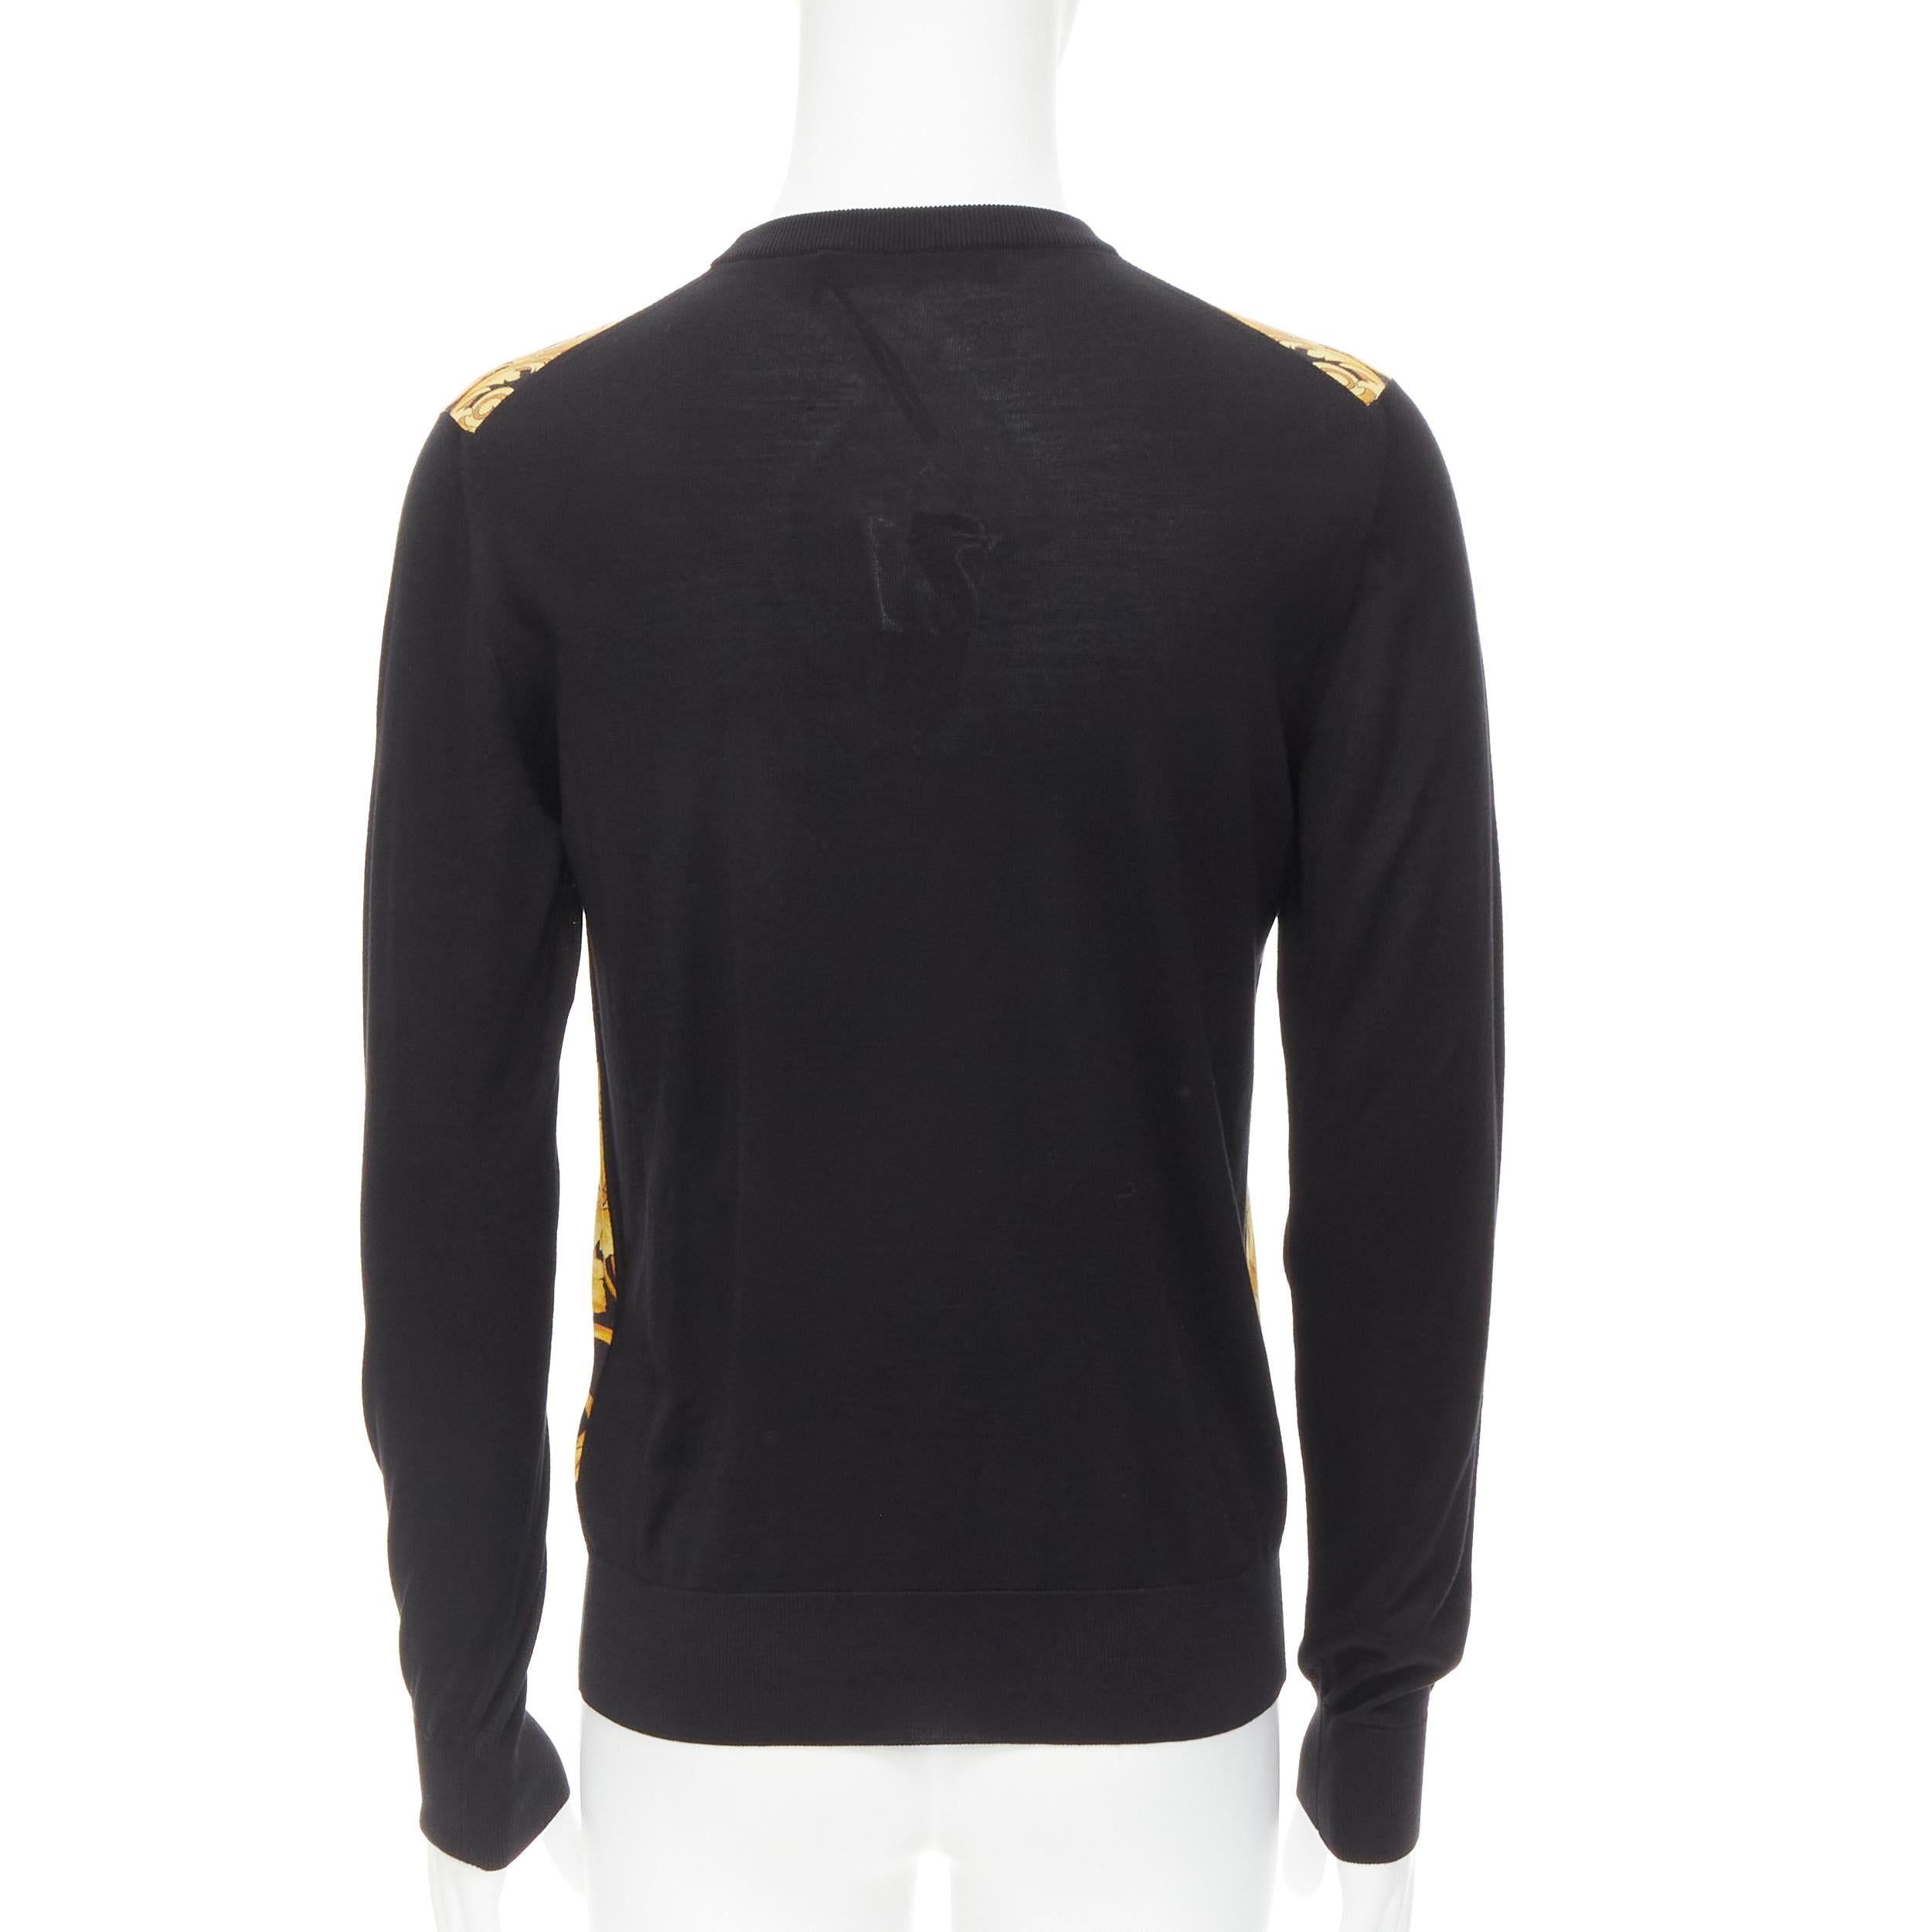 Black new VERSACE black gold Barocco Hibiscus Medusa 100% silk knit sweater IT48 M